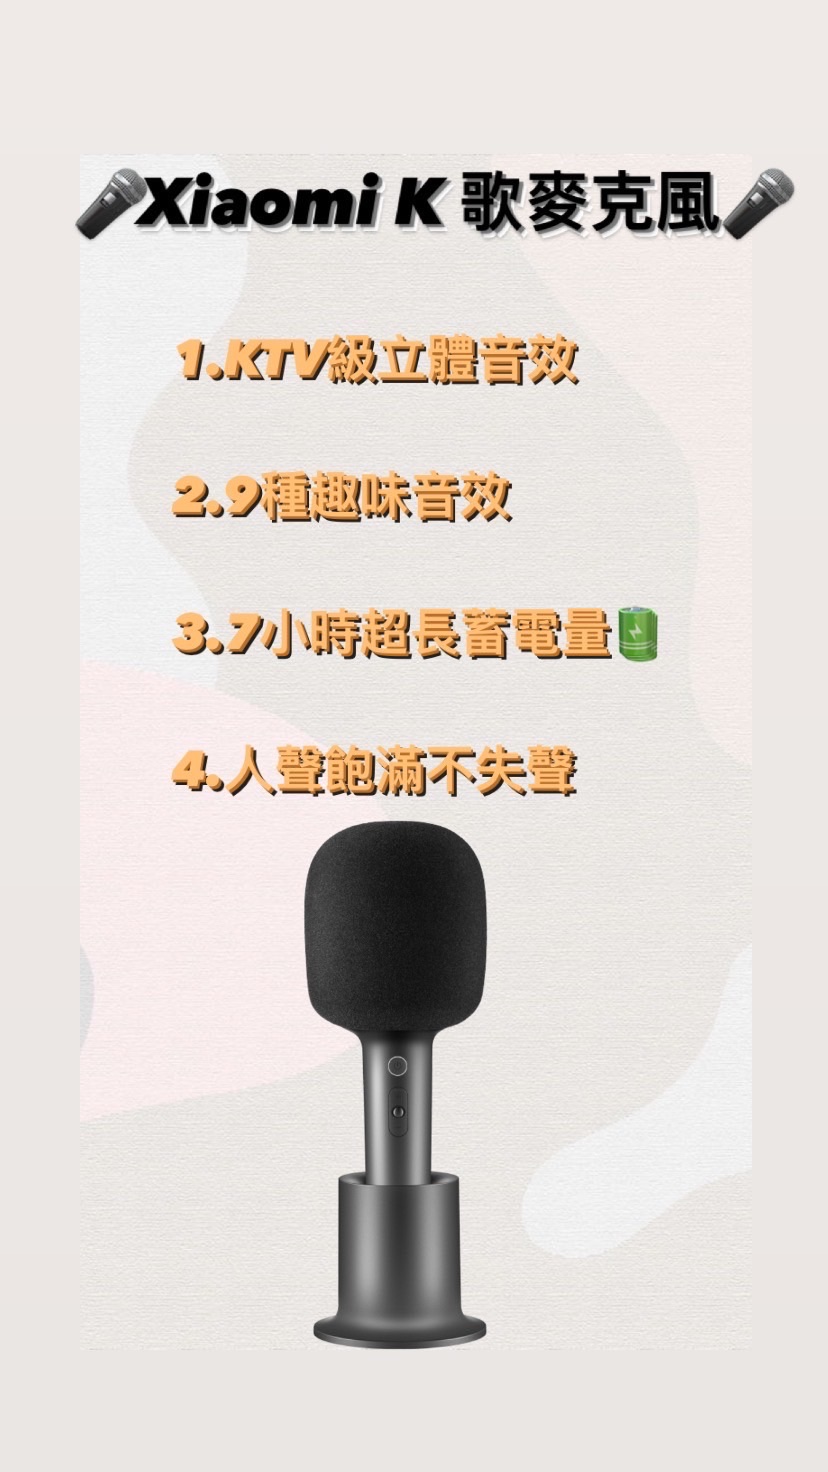 Xiaomi K 歌麥克風